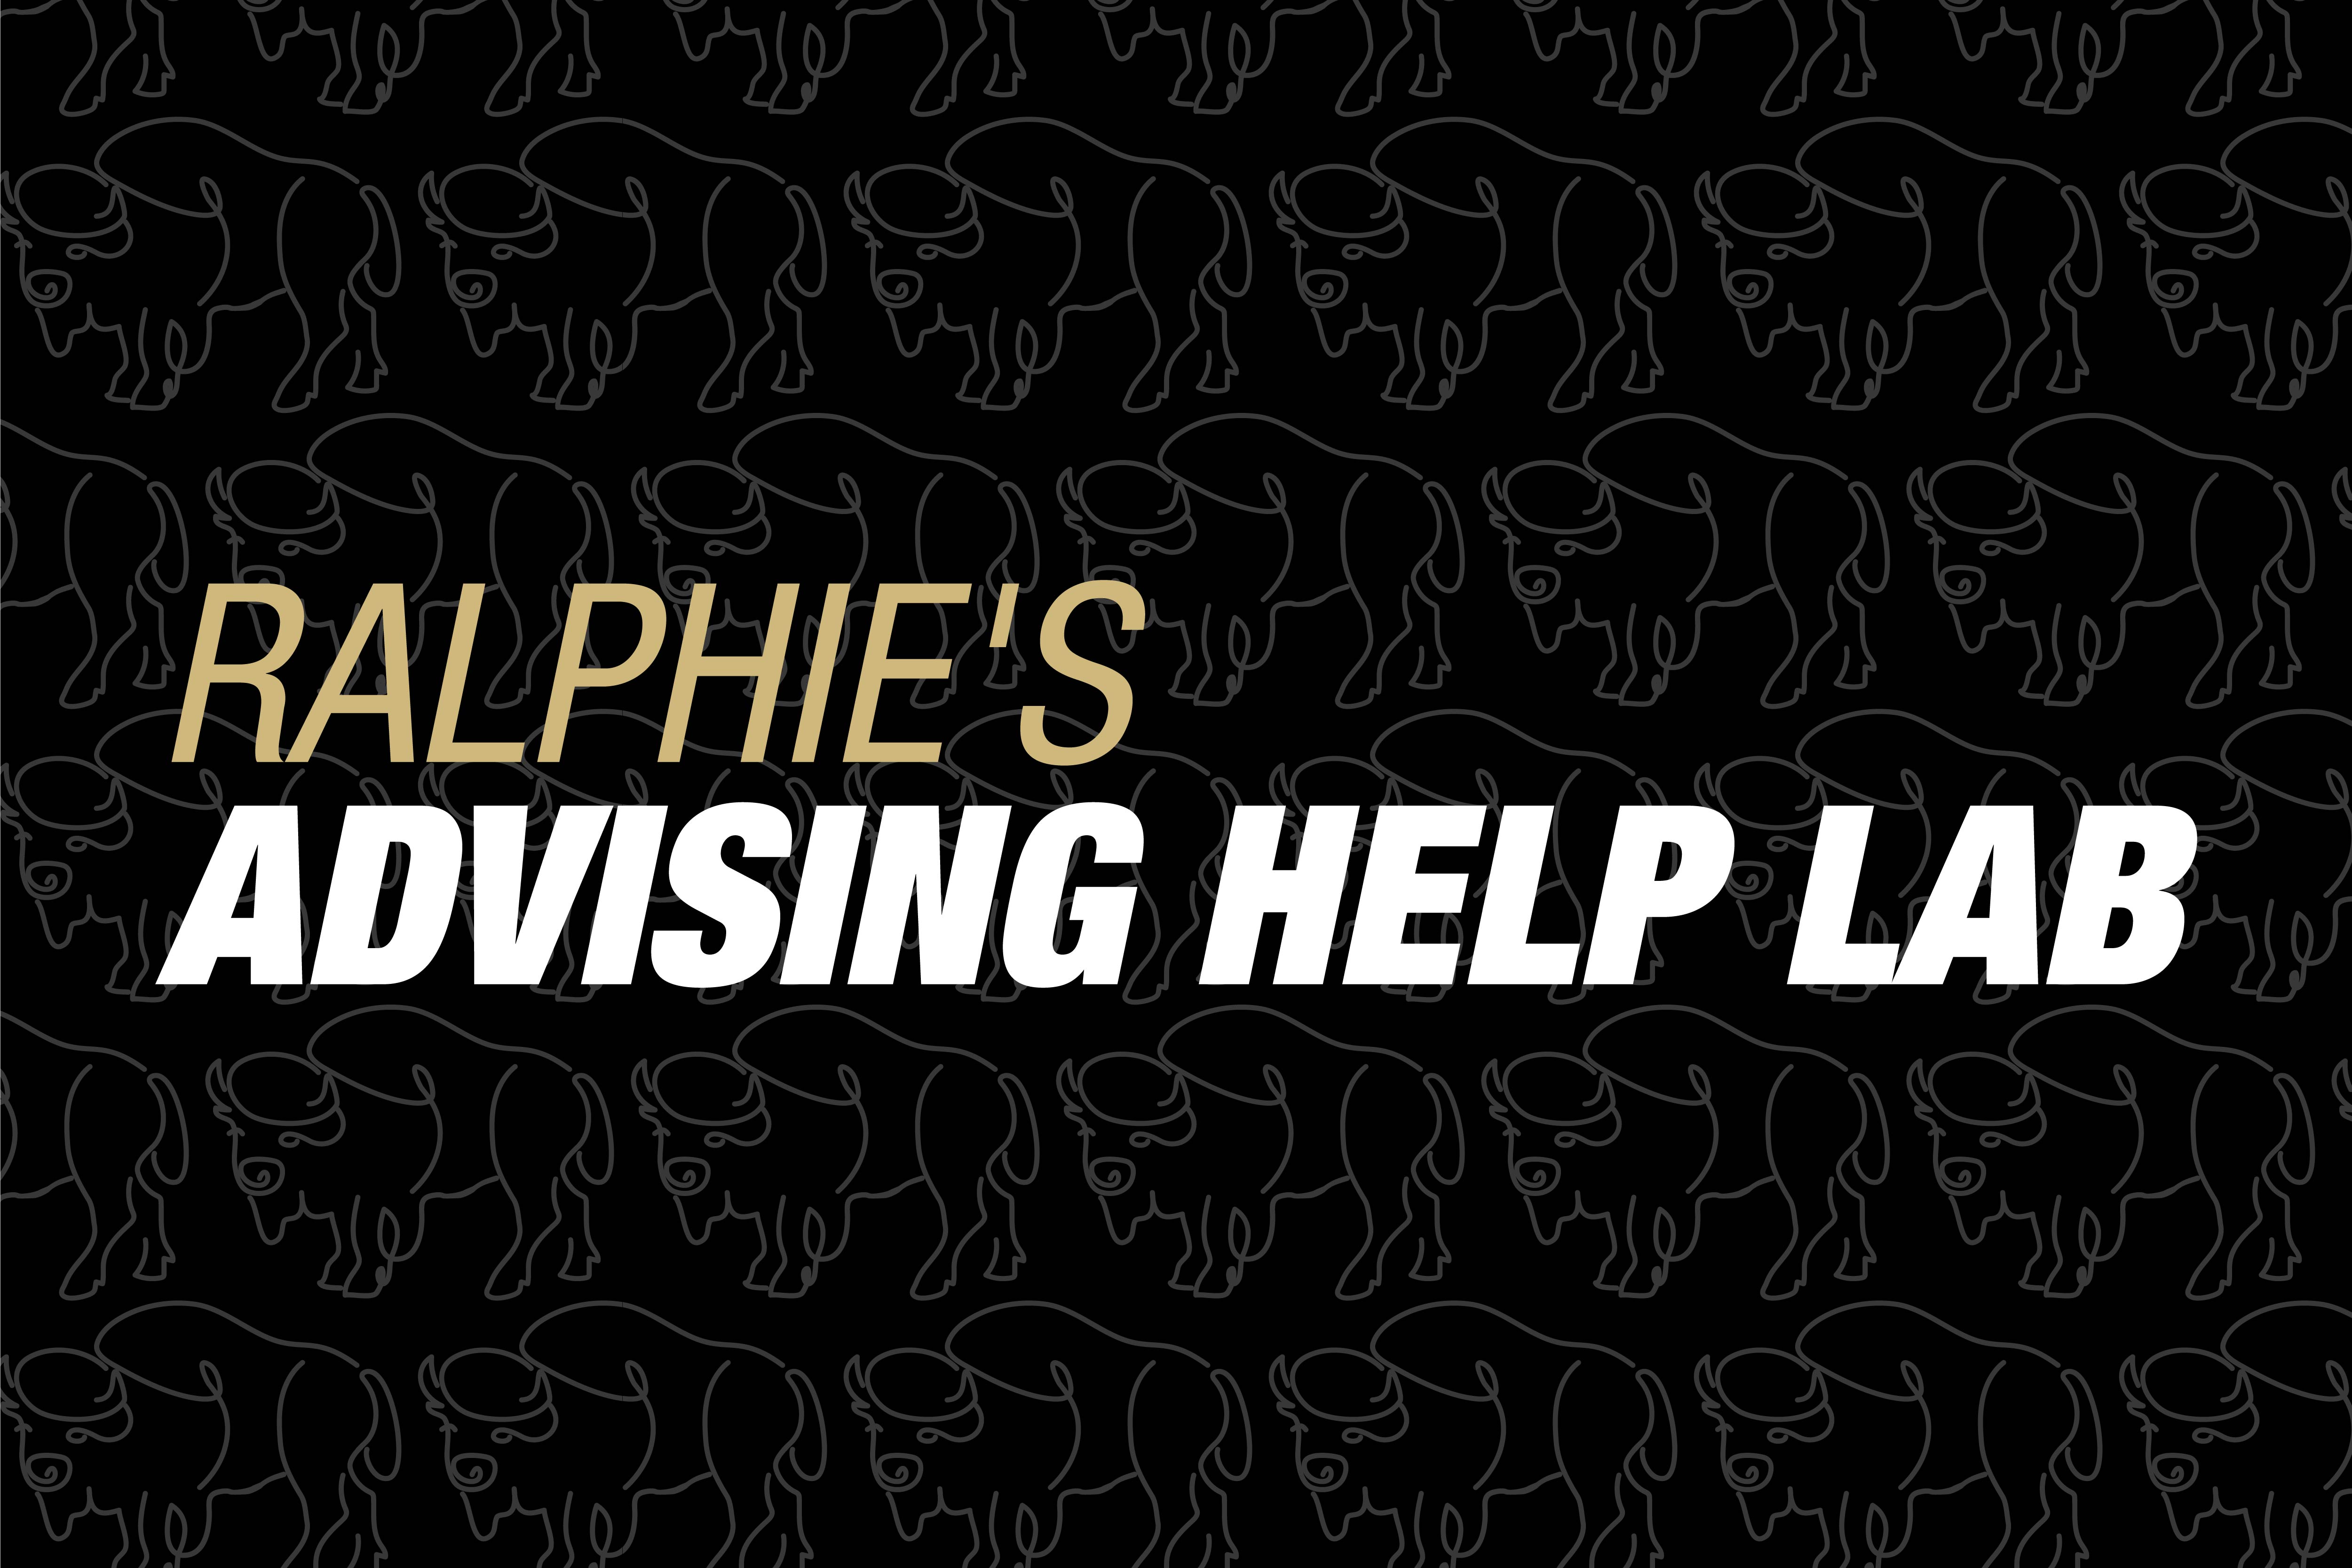 Ralphie's Advising Help Lab